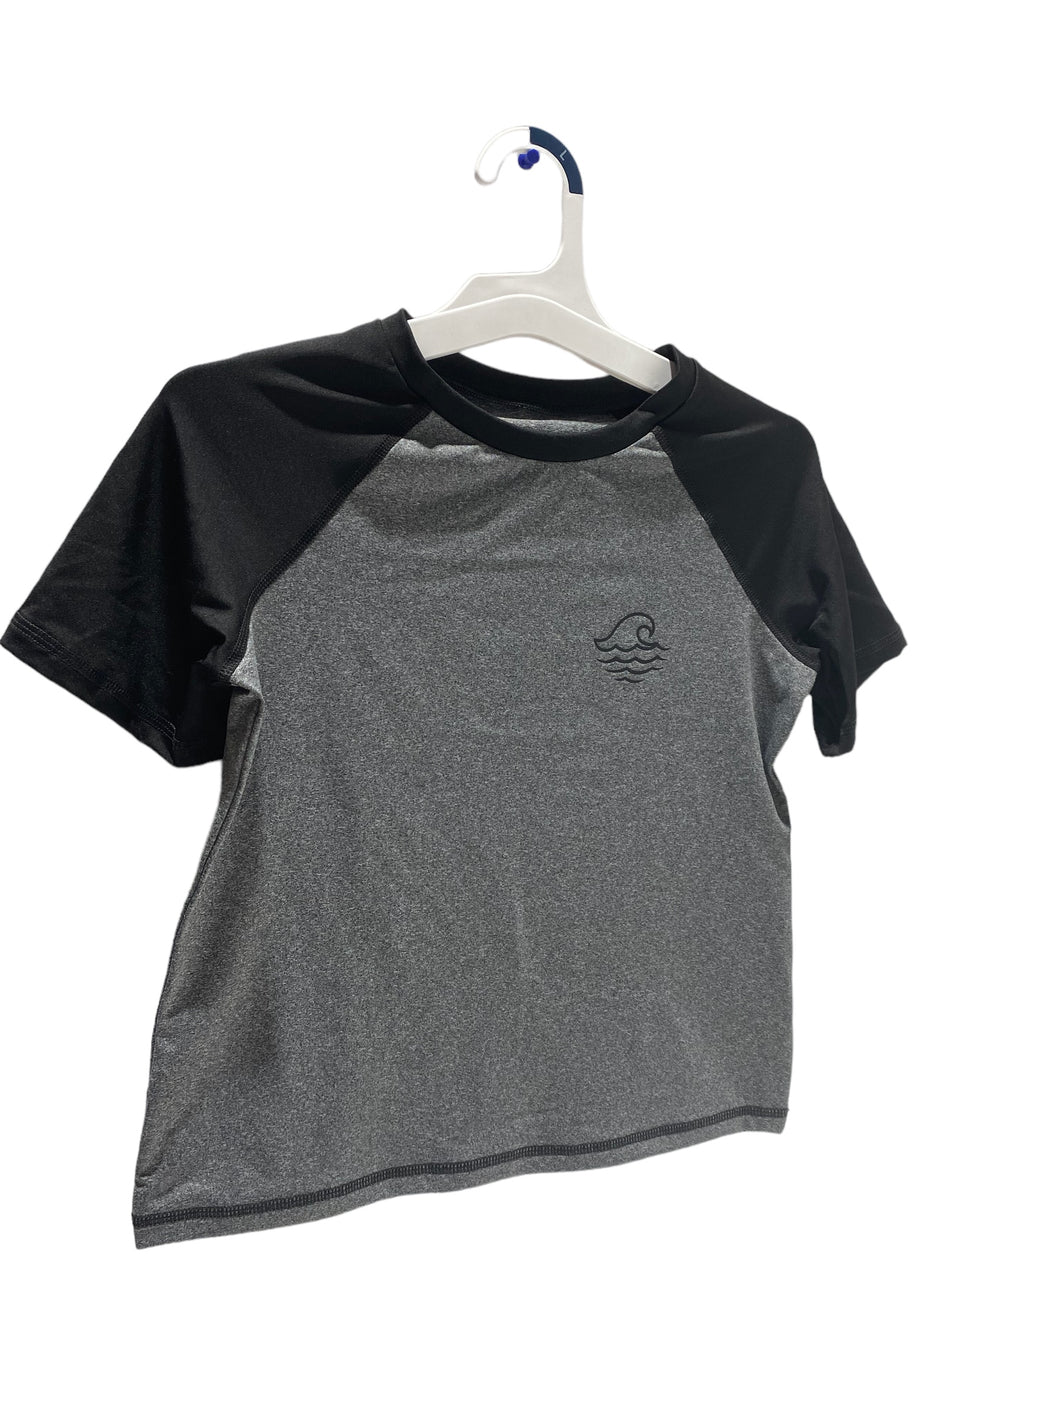 Art Class Black Short Sleeve Shirt Kids Size-L - FreemanLiquidators - [product_description]